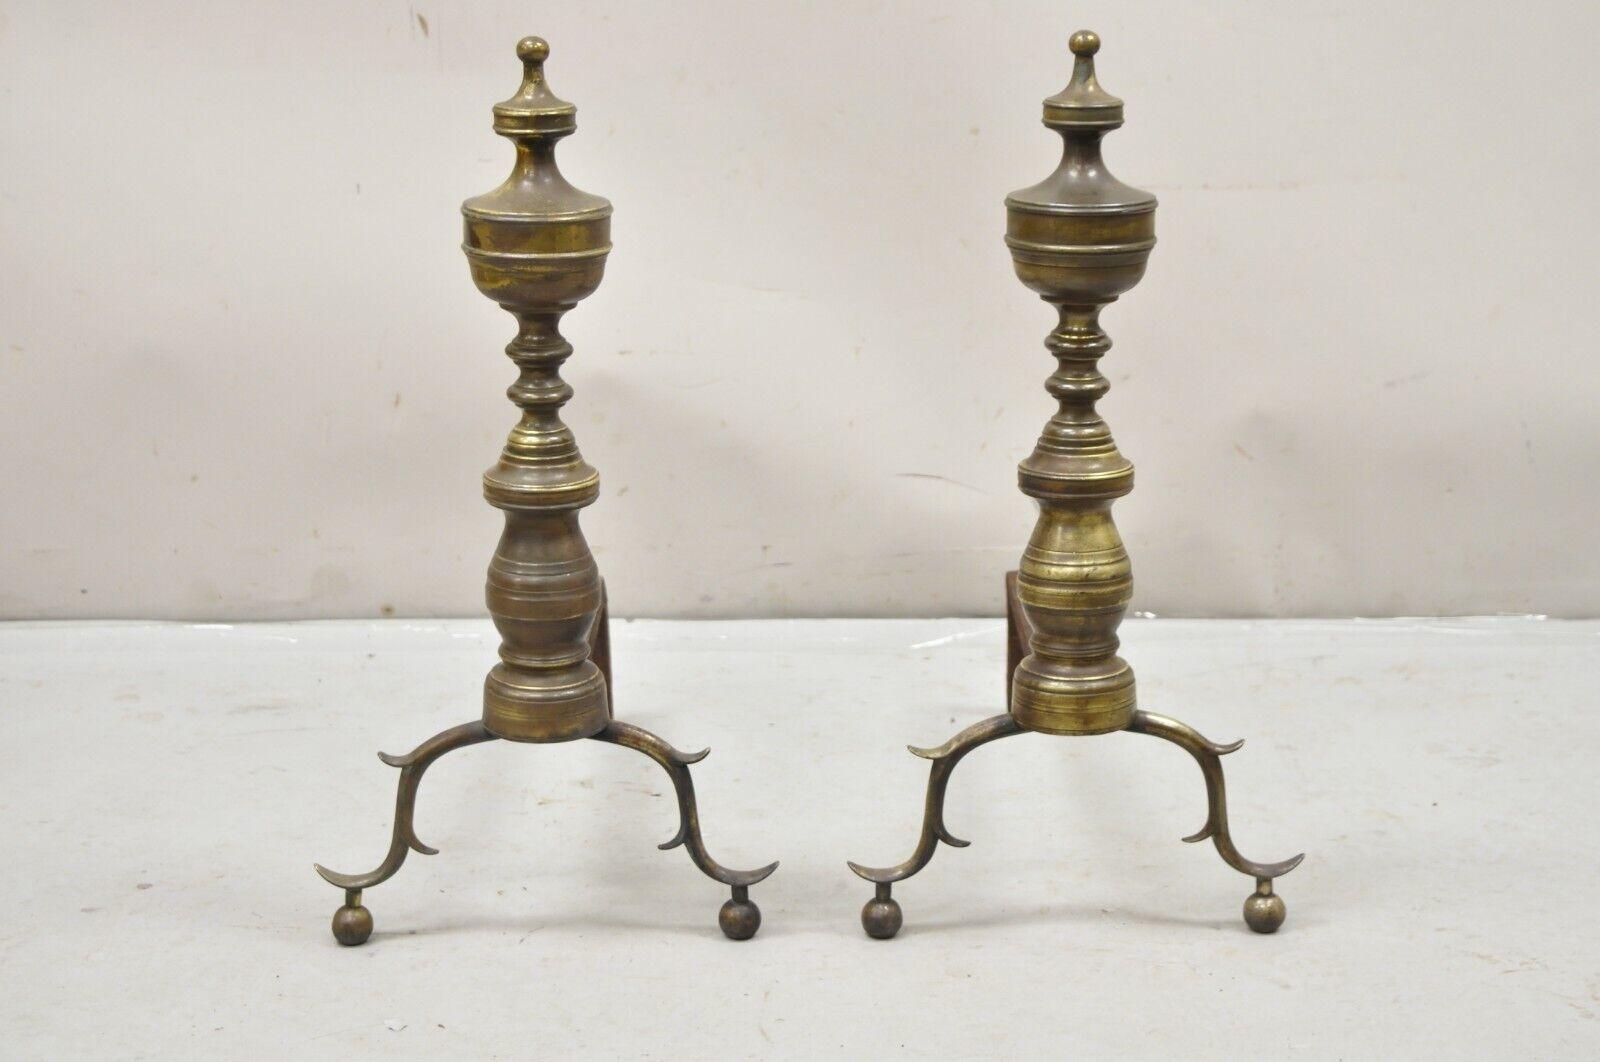 Antique Brass Federal Branch Leg Urn Finial Cast Iron Andirons - ein Paar. Circa 19. Jahrhundert. Abmessungen: 24